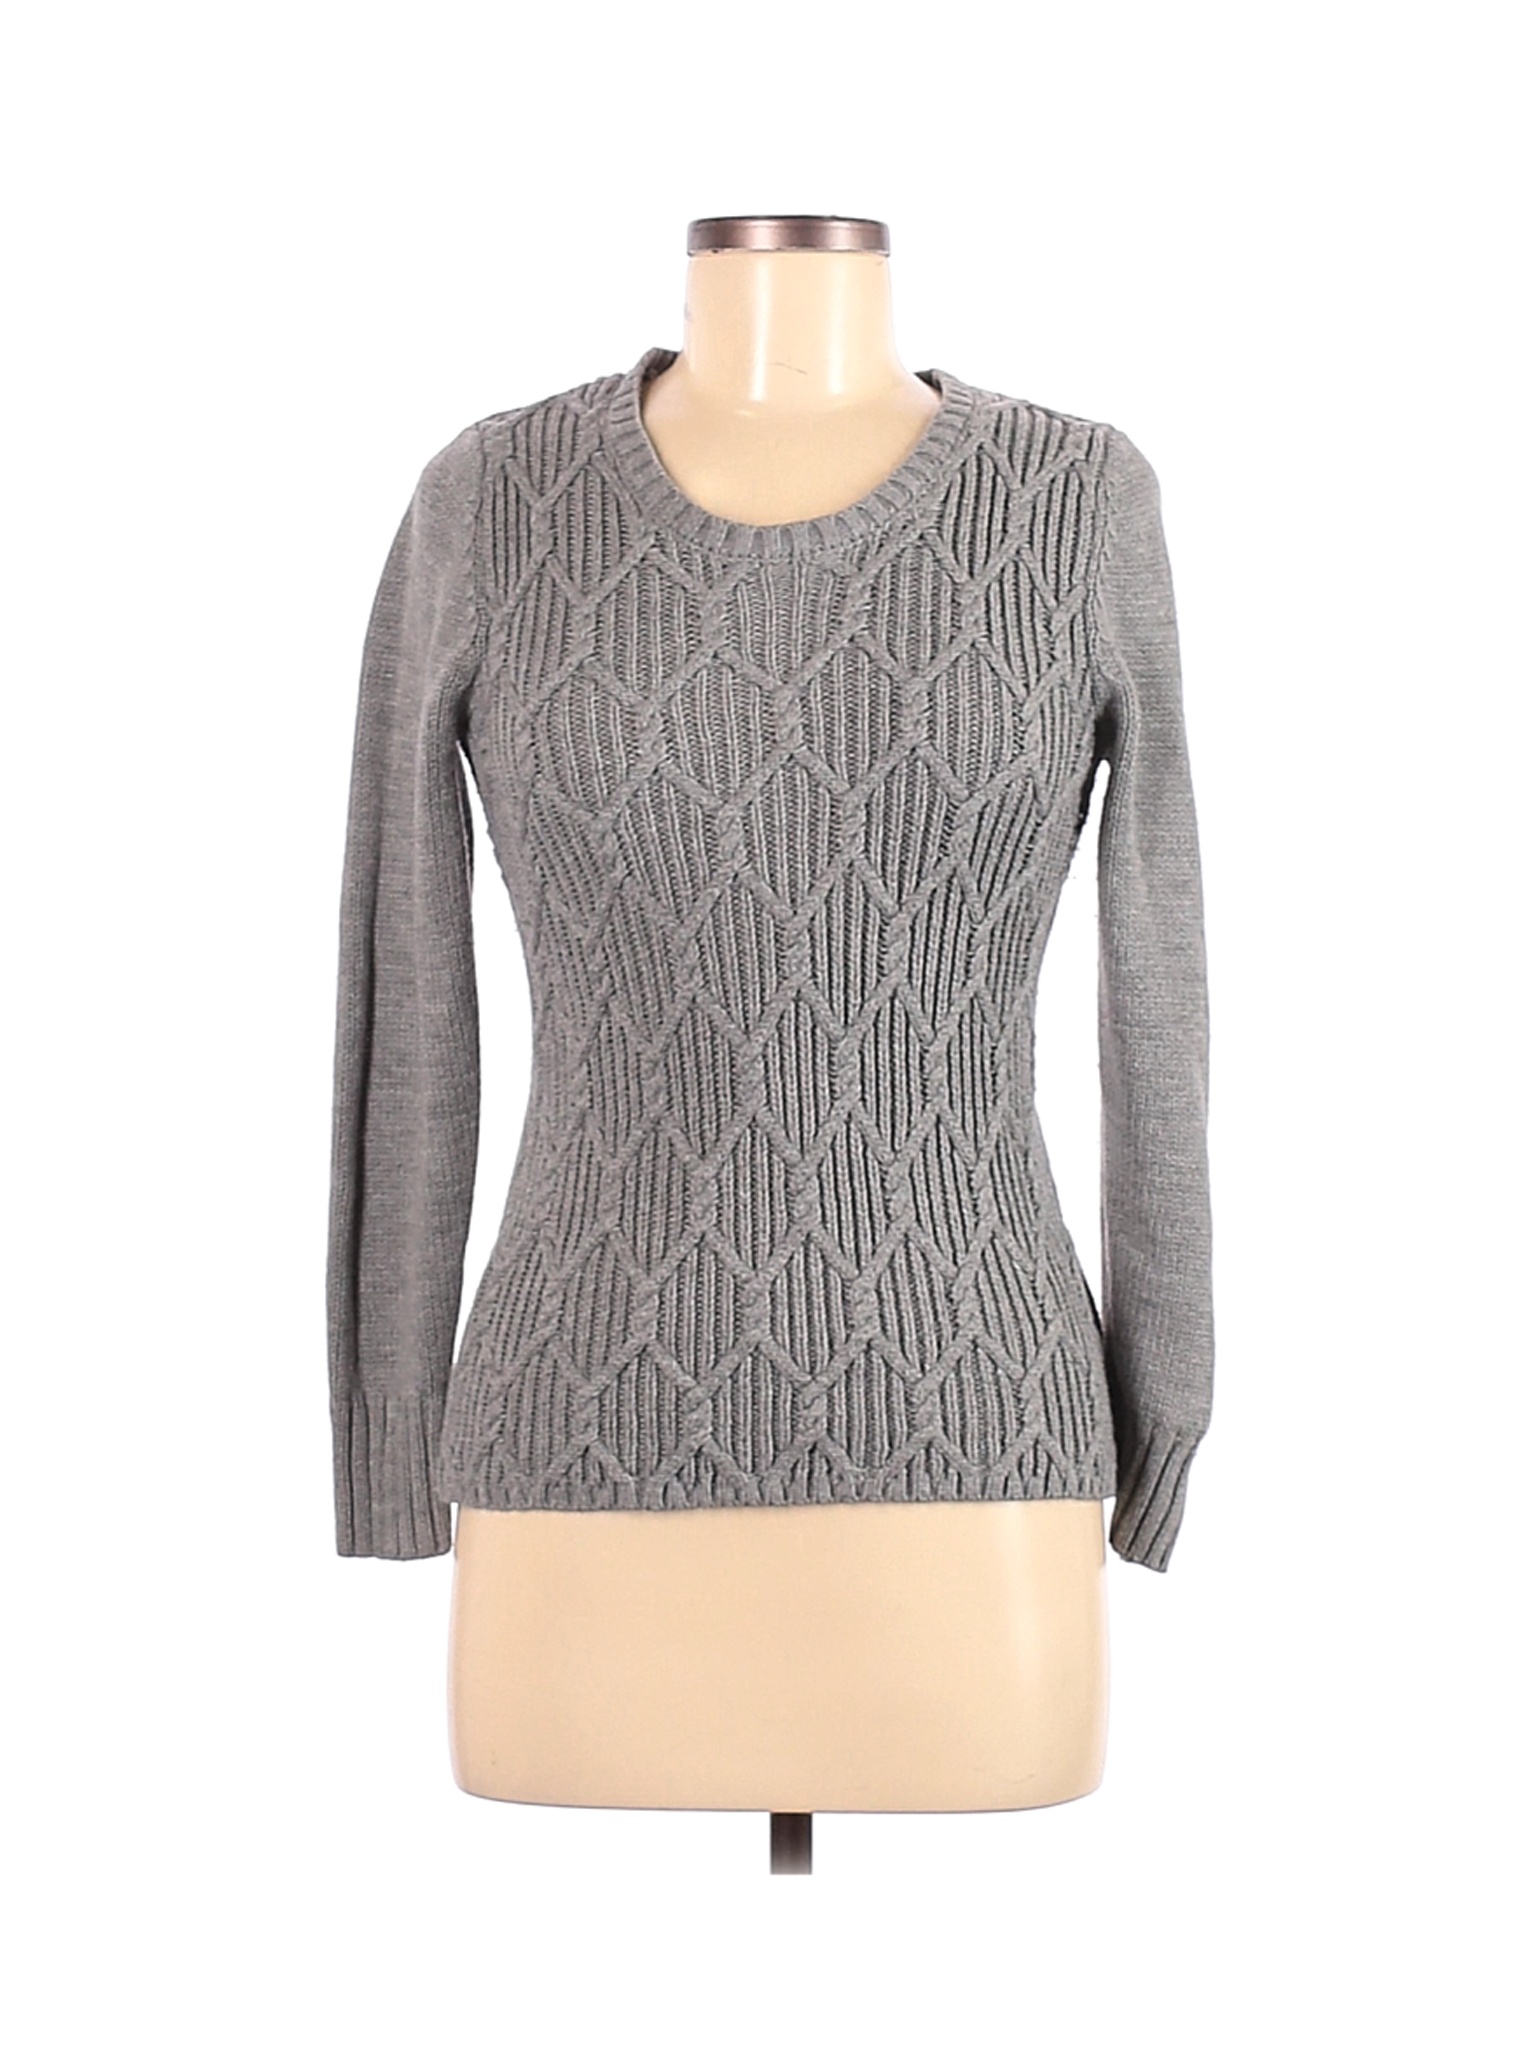 Notations Women Gray Pullover Sweater M Petites | eBay